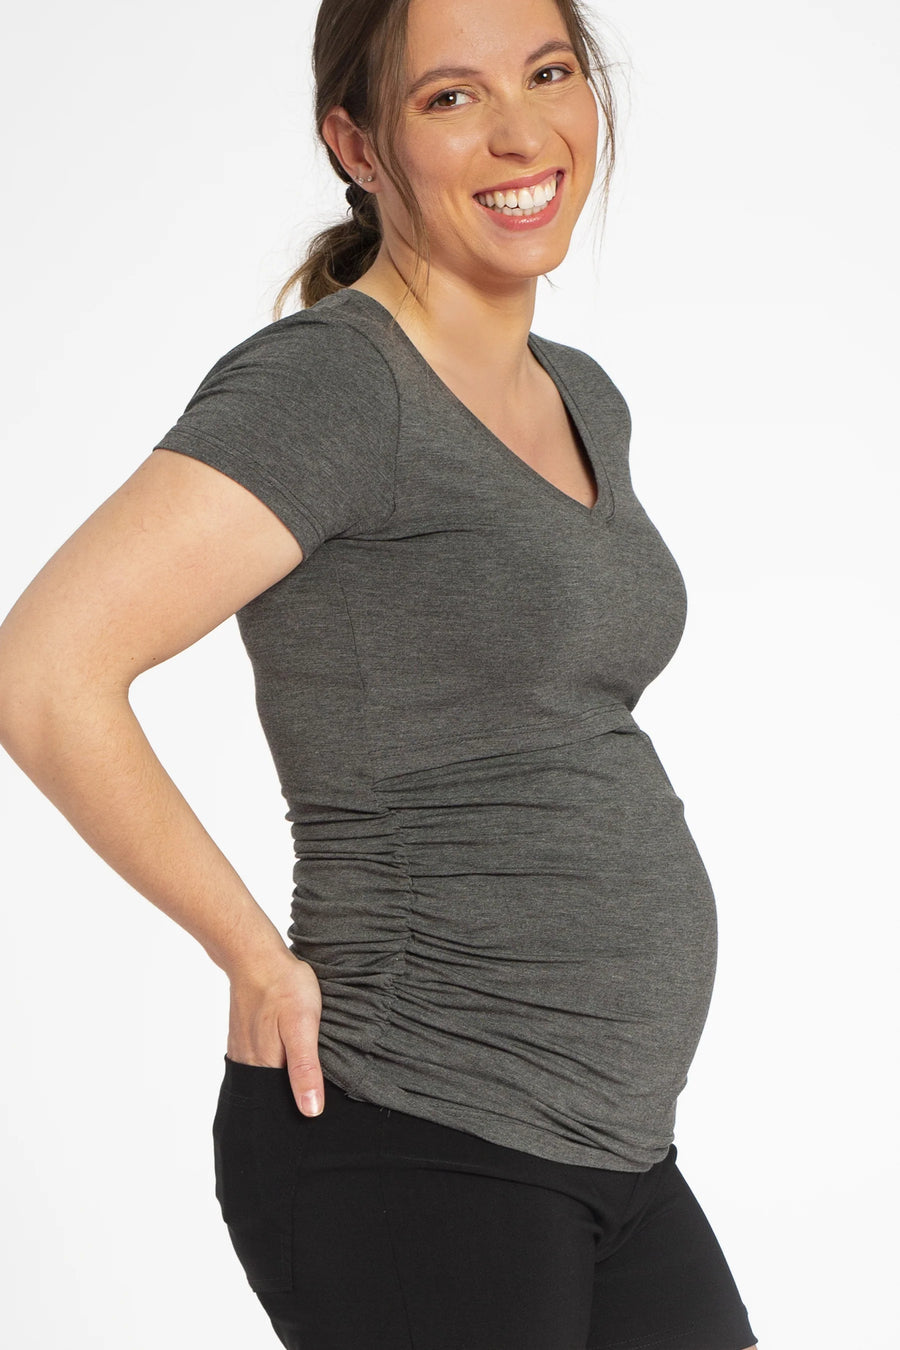 Trouser Expander Cotton Flexi Belt Carriwell 3 pack, Maternity & More, Maternity Wear